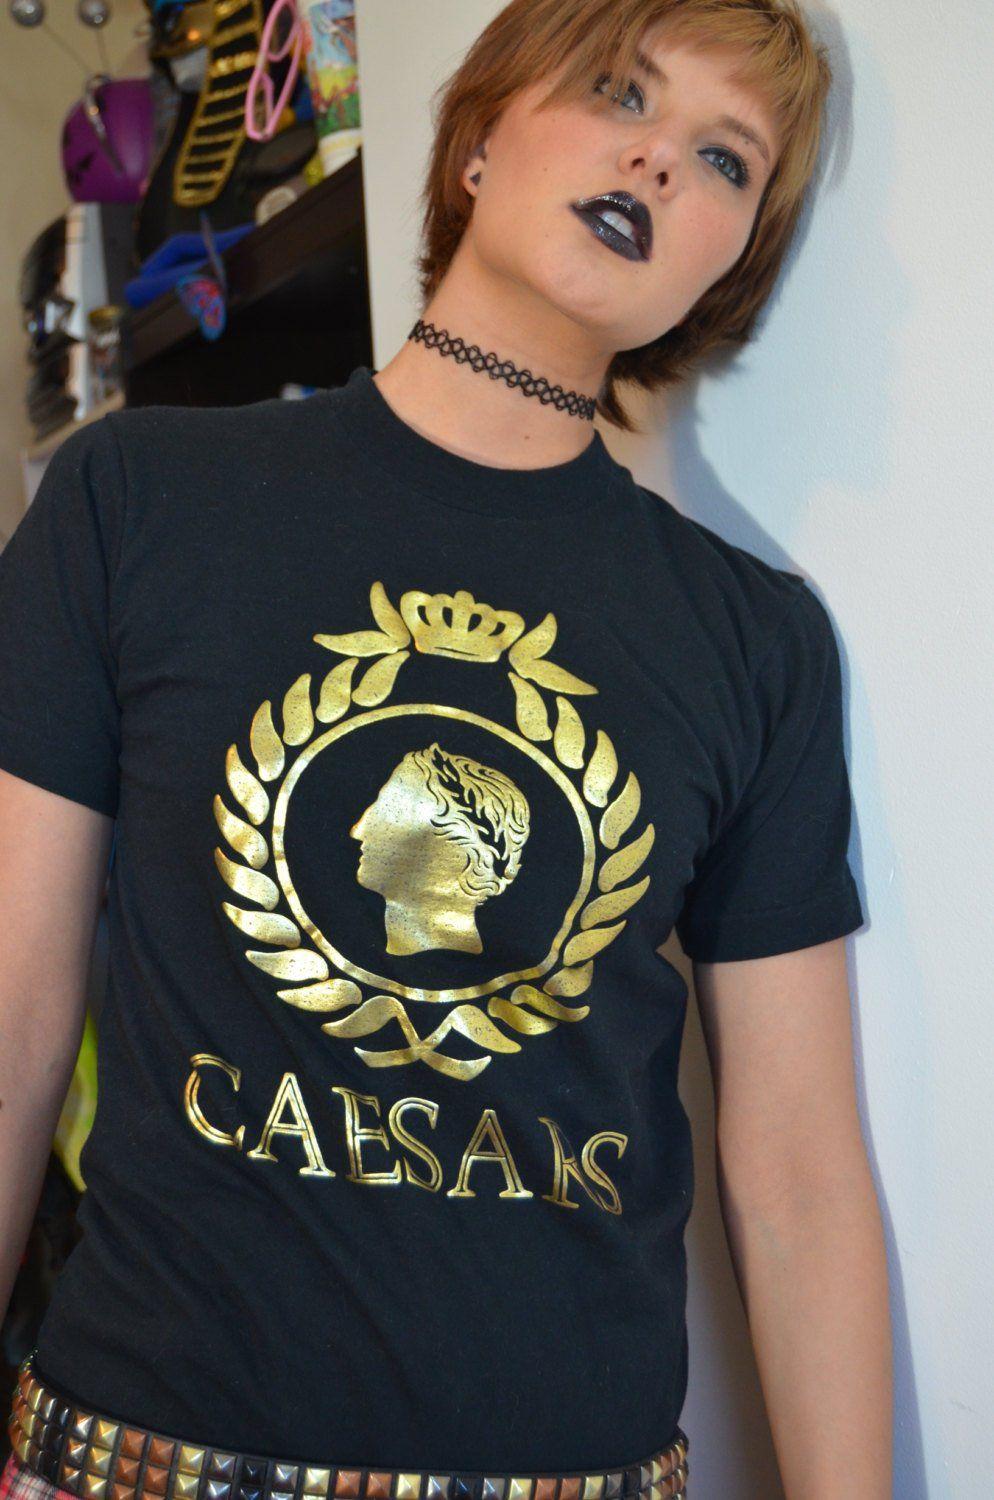 Casesar Palace Shirts Logo - Vintage 80s Caesars Palace T Shirt Tee, Rare Gold Foil Logo Print ...